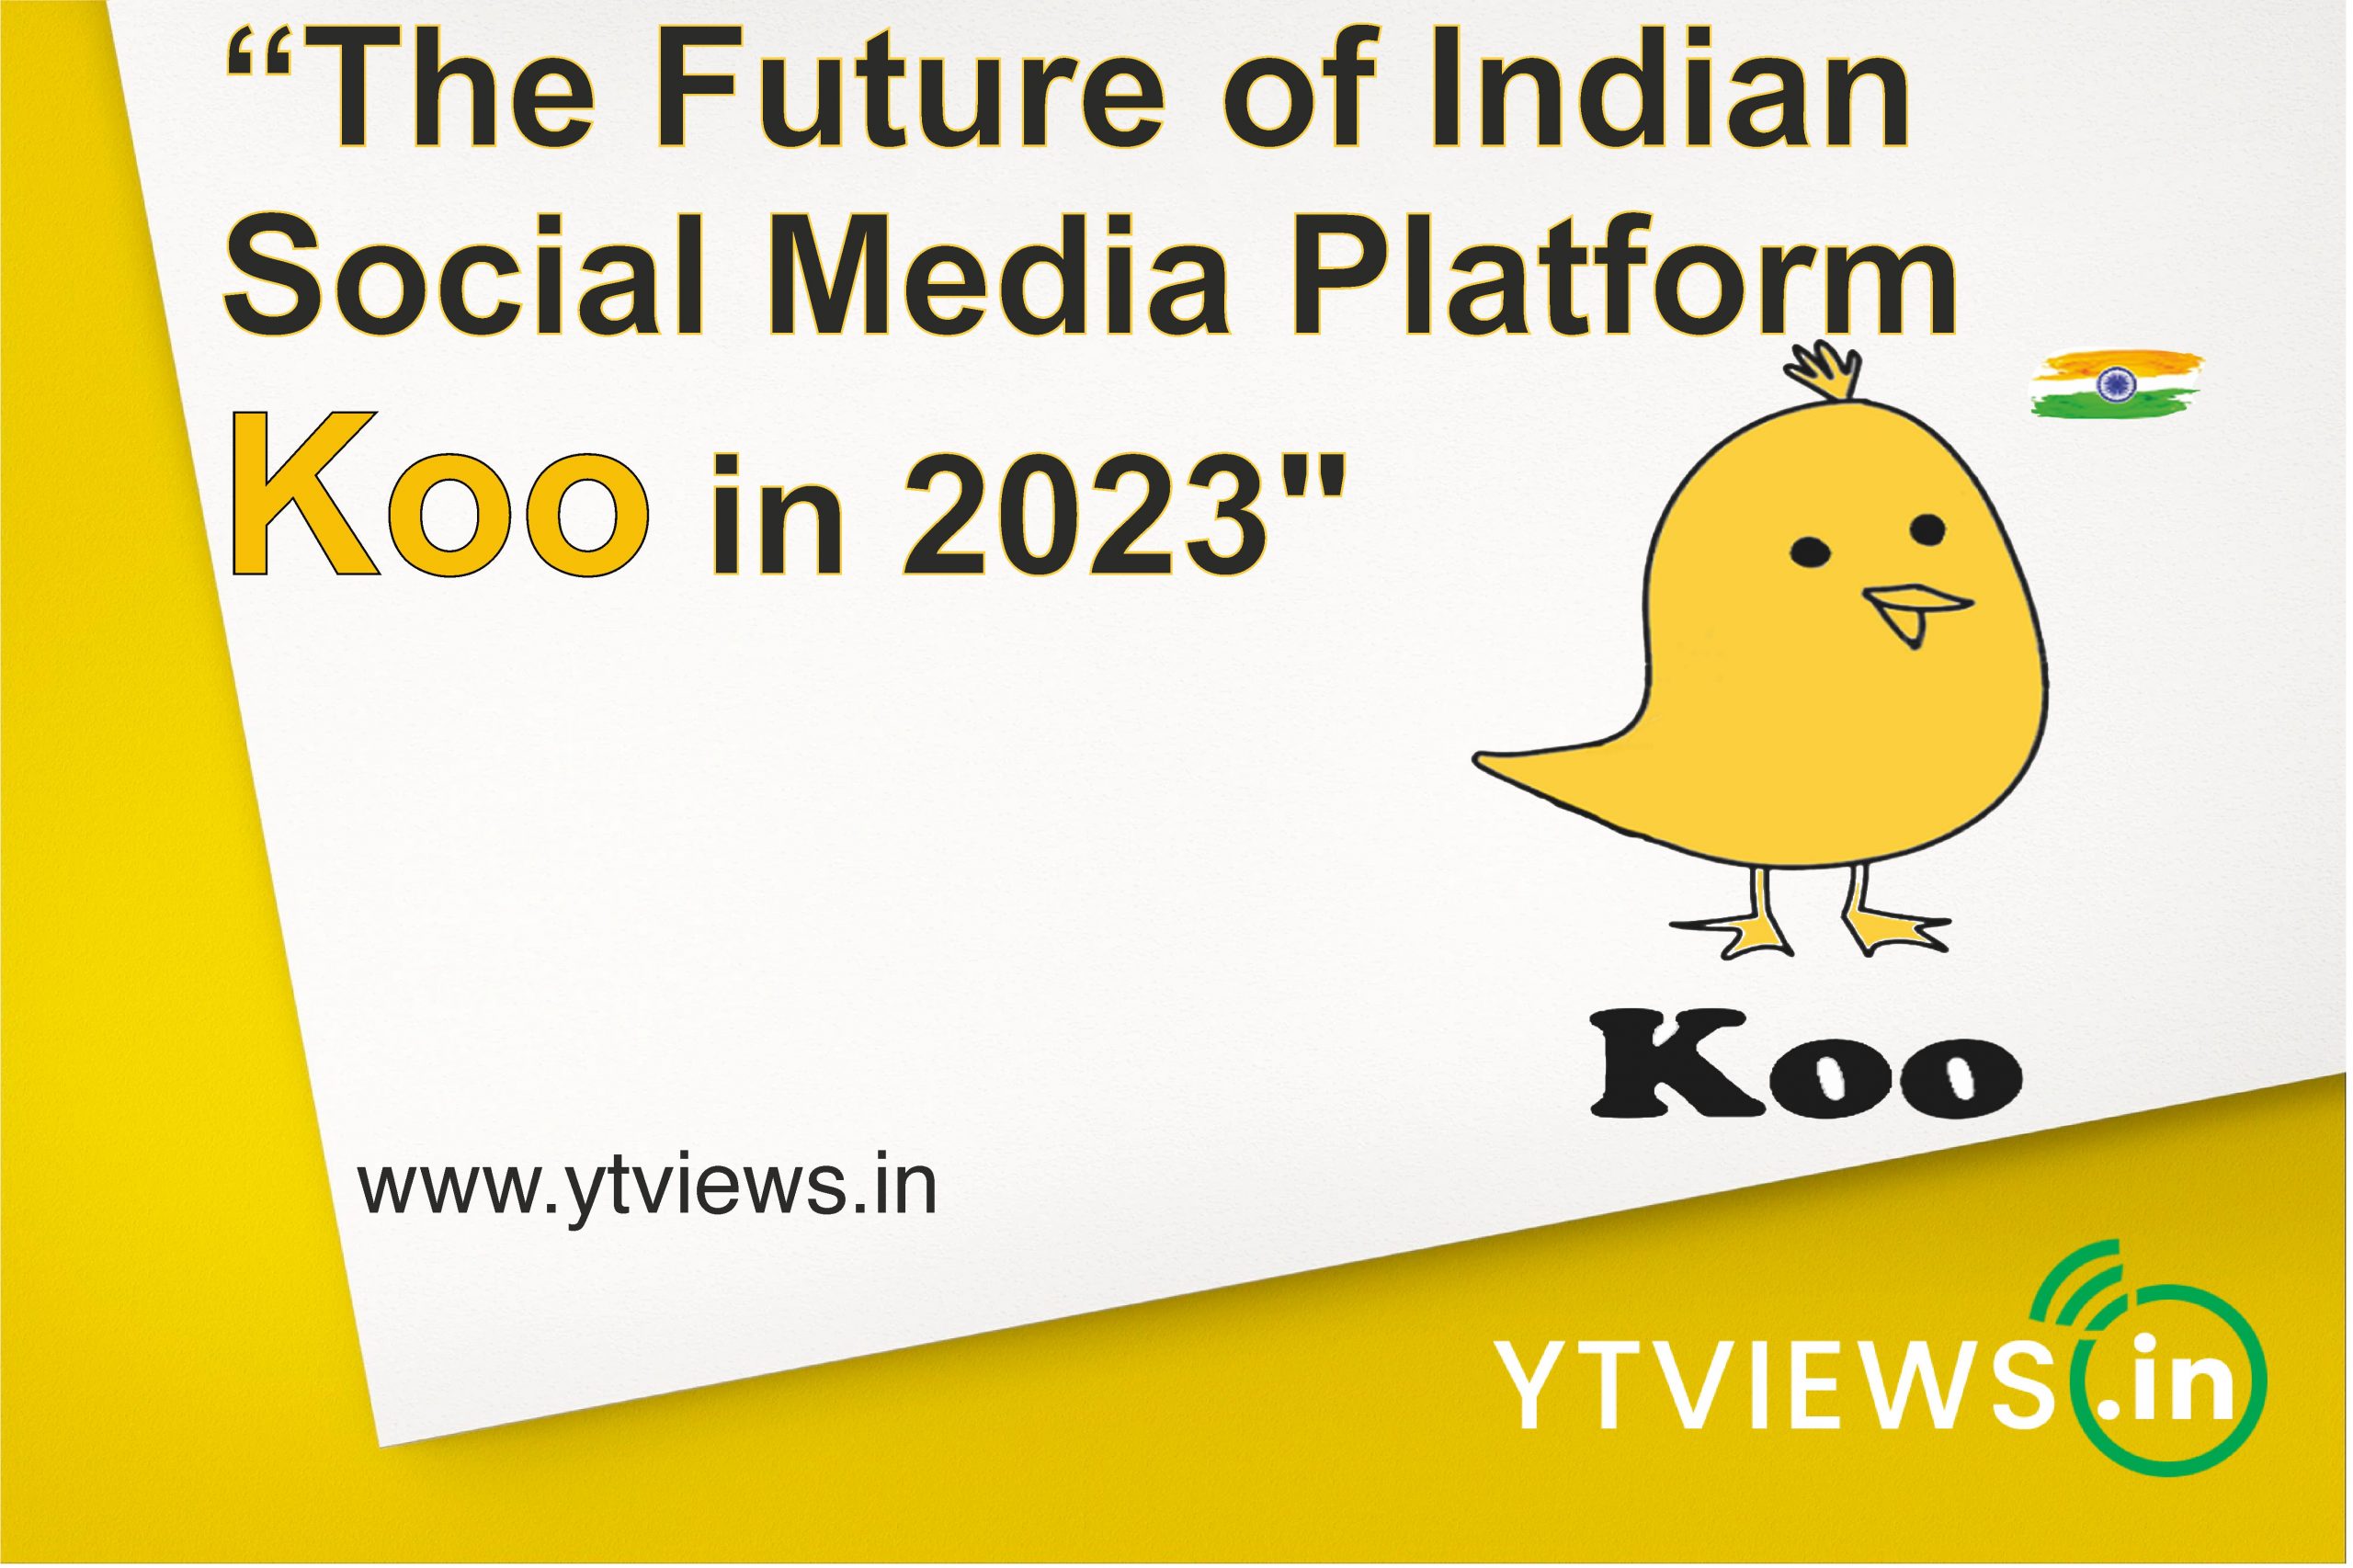 The future of Indian social media platform Koo in 2023